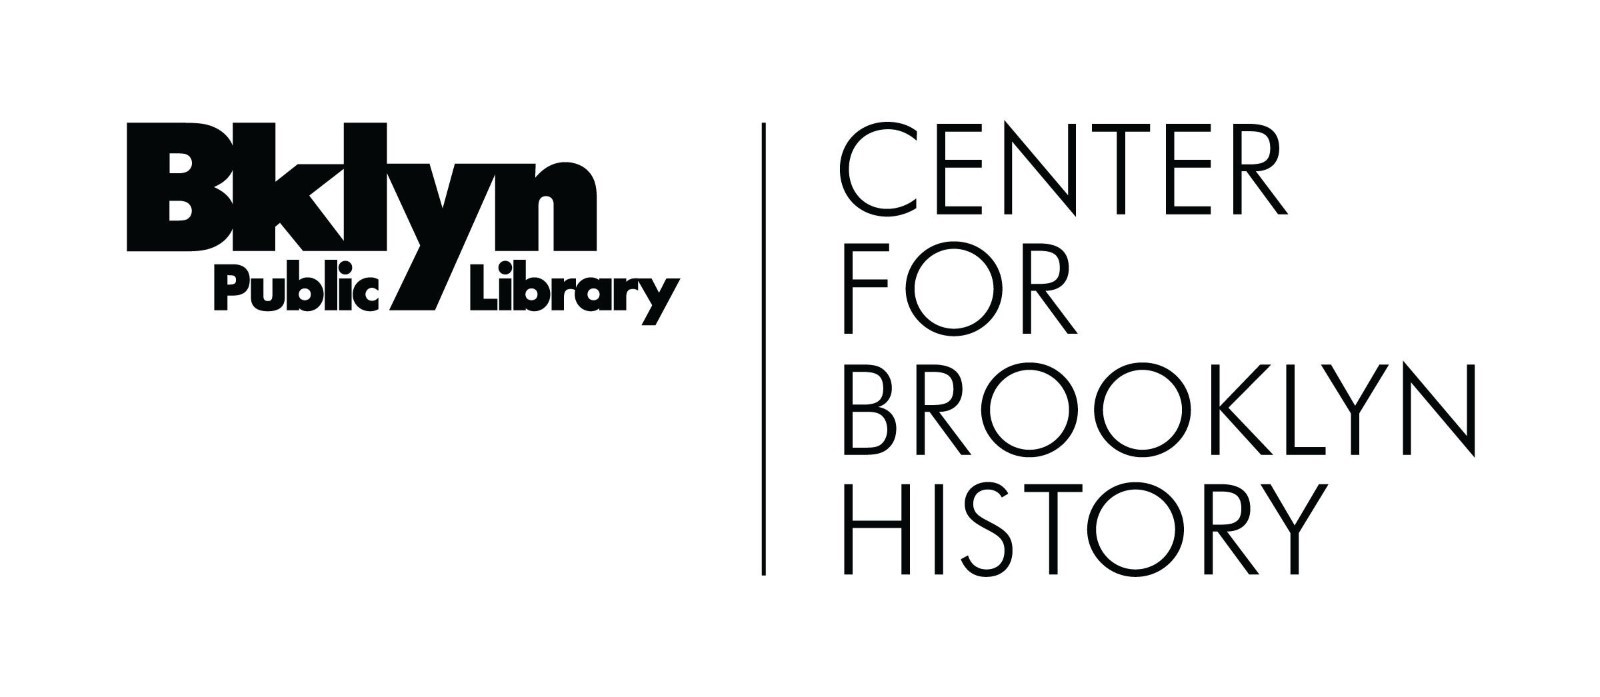 Brooklyn Public Library, Center For Brooklyn History. 